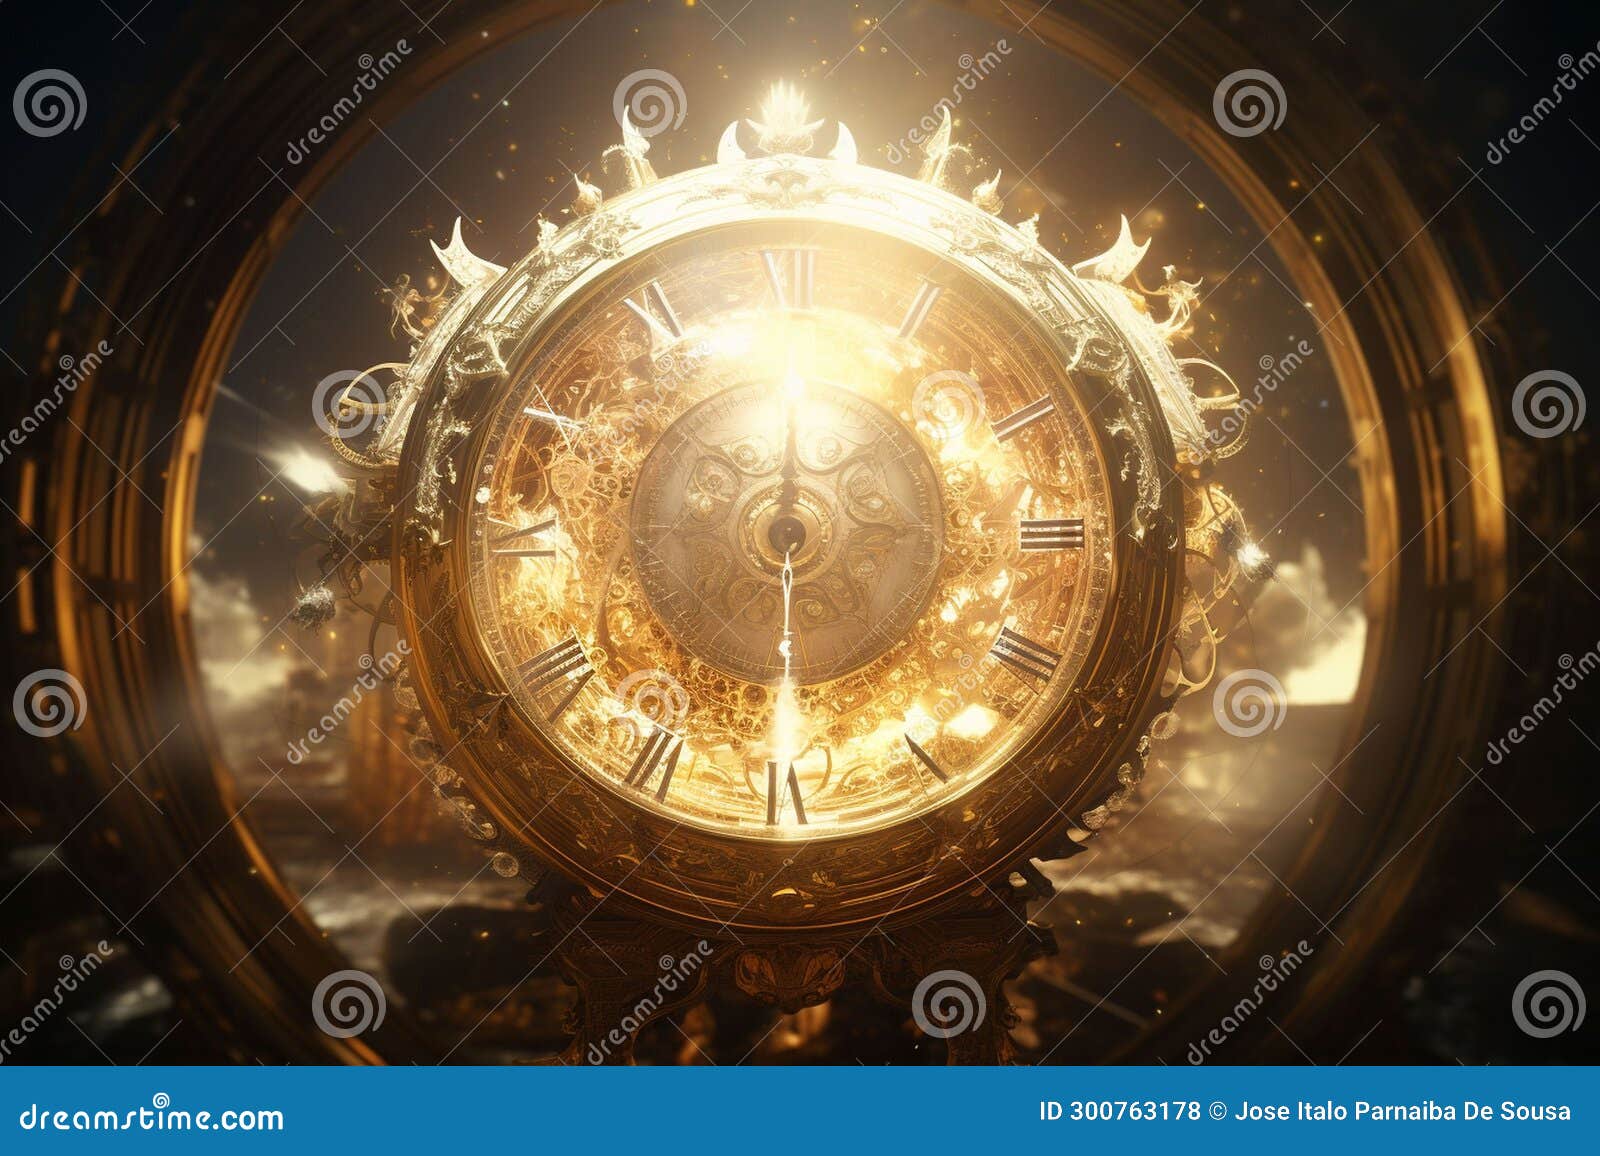 celestial clockwork orchestrating a mesmerizing